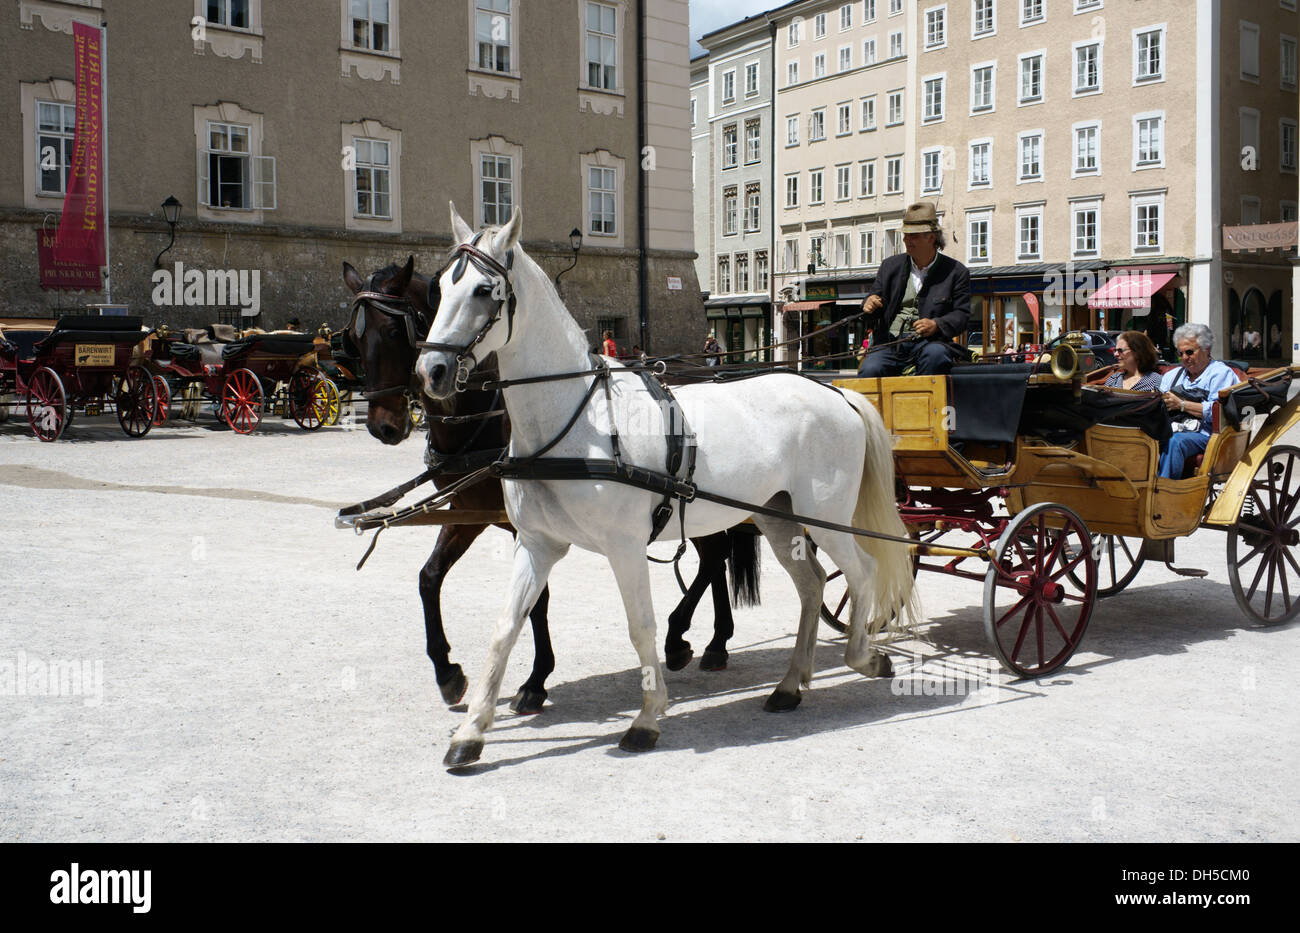 Salzburg, Austria Horse drawn Fiaker carriage ride in Altstadt (old town) Salzburg, Austria. Photo May 2013. Stock Photo